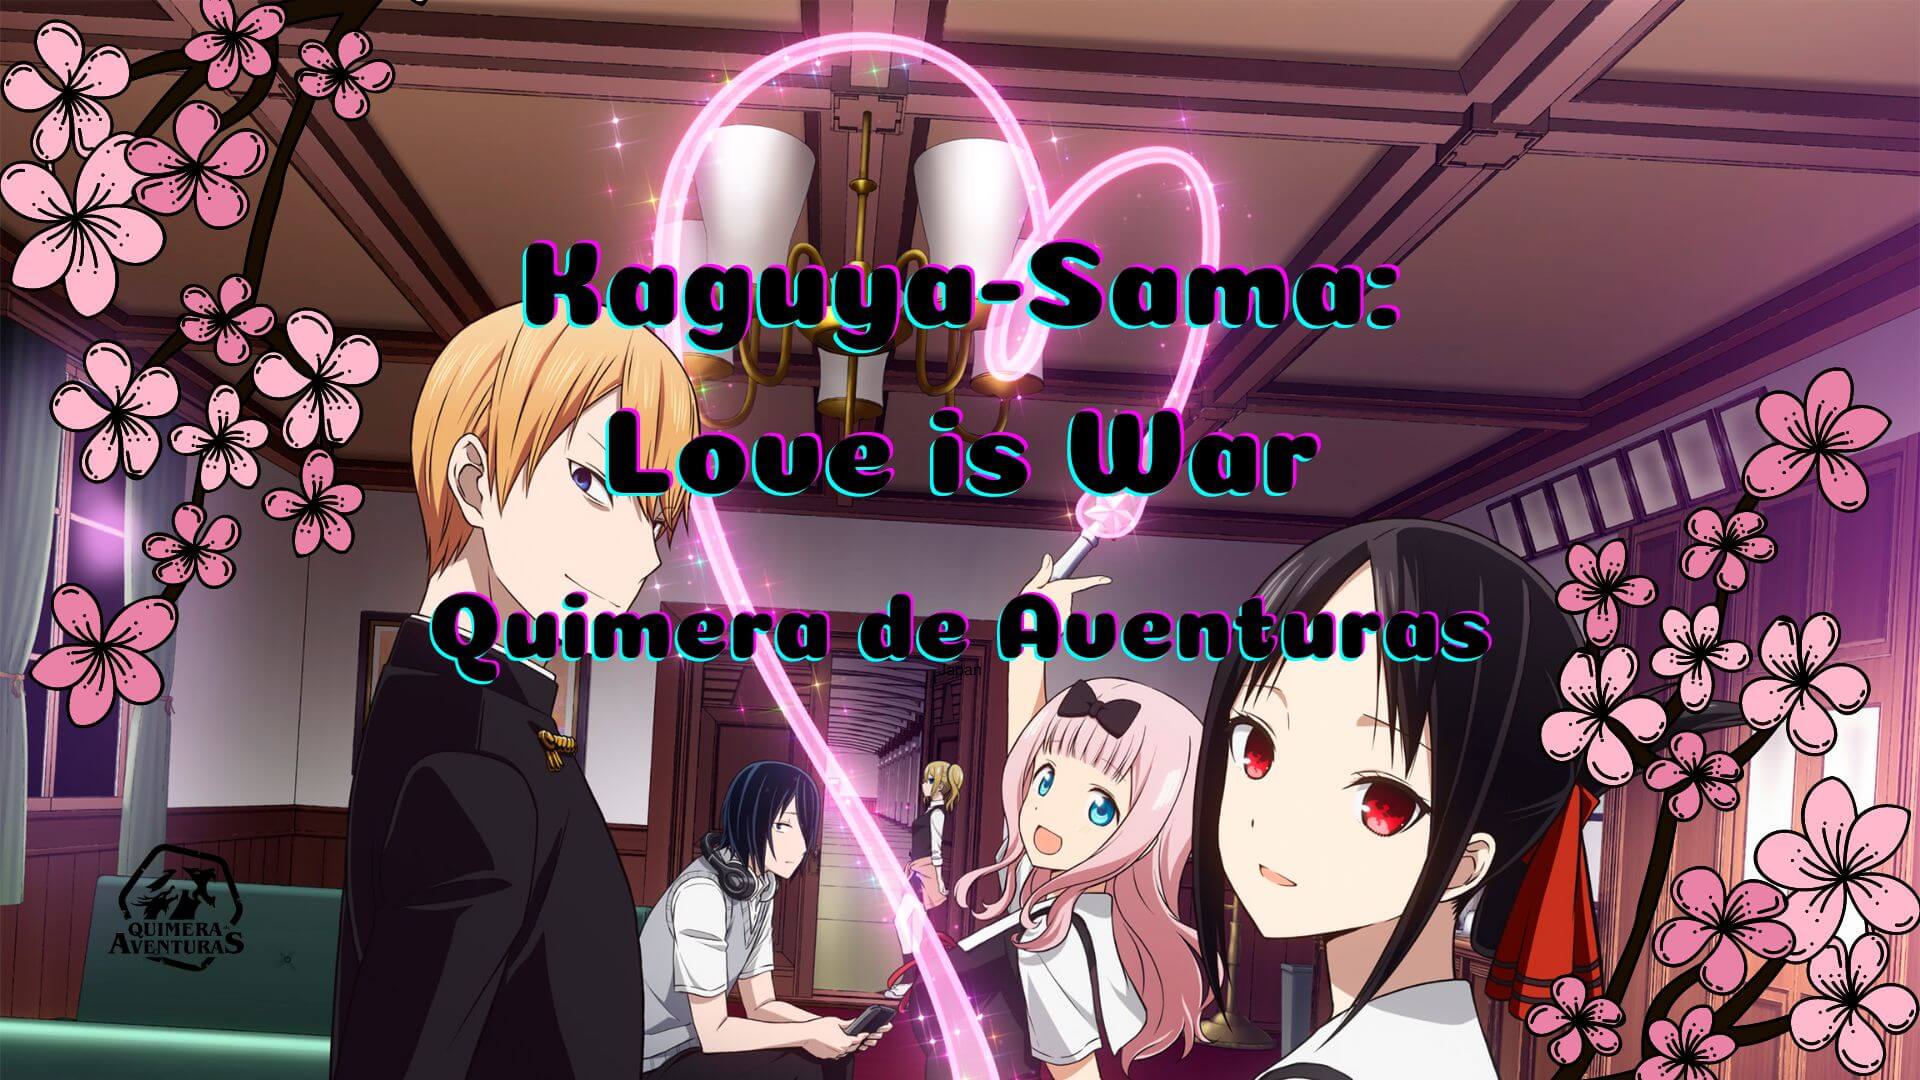 Ver Kaguya-sama: Love Is War temporada 3 episodio 1 en